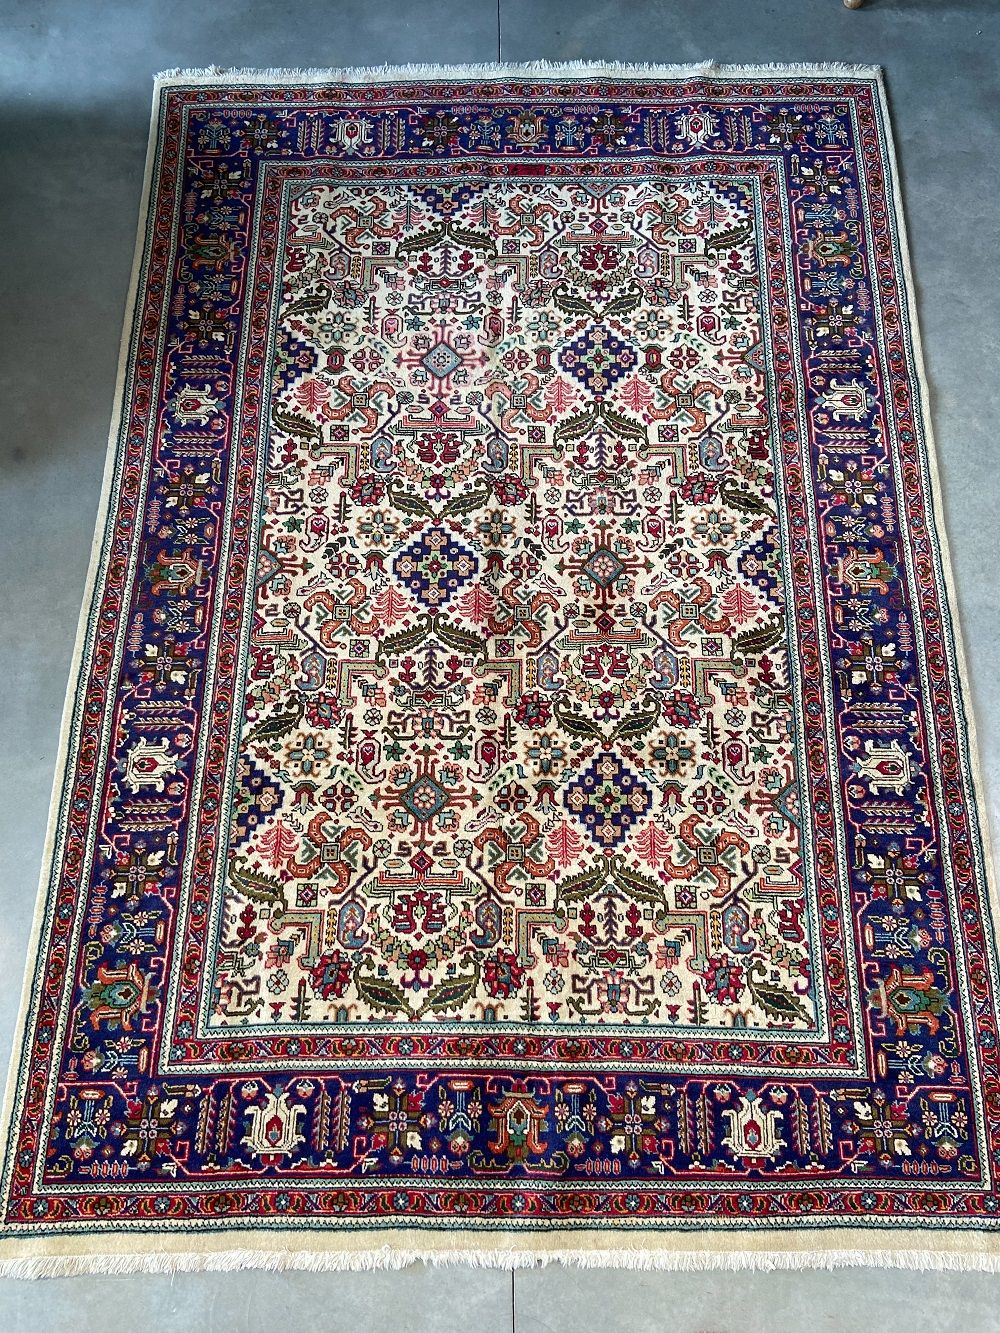 Null Original tapis Tabriz (Nord-Ouest de l'Iran) vers 1975. Champ beige à origi&hellip;